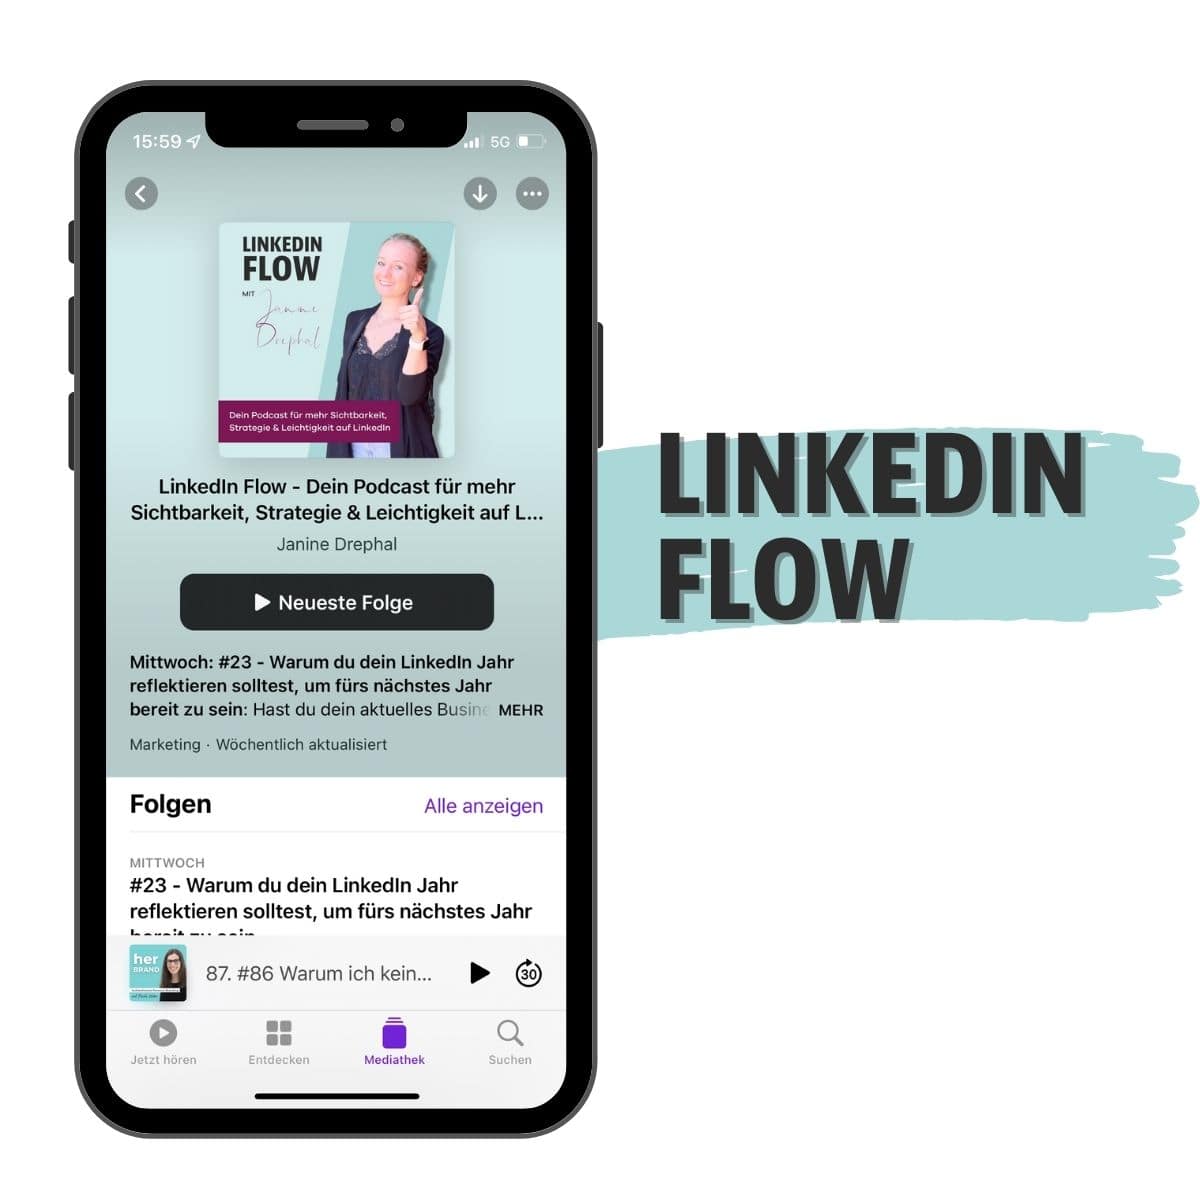 LinkedIn Flow Podcast